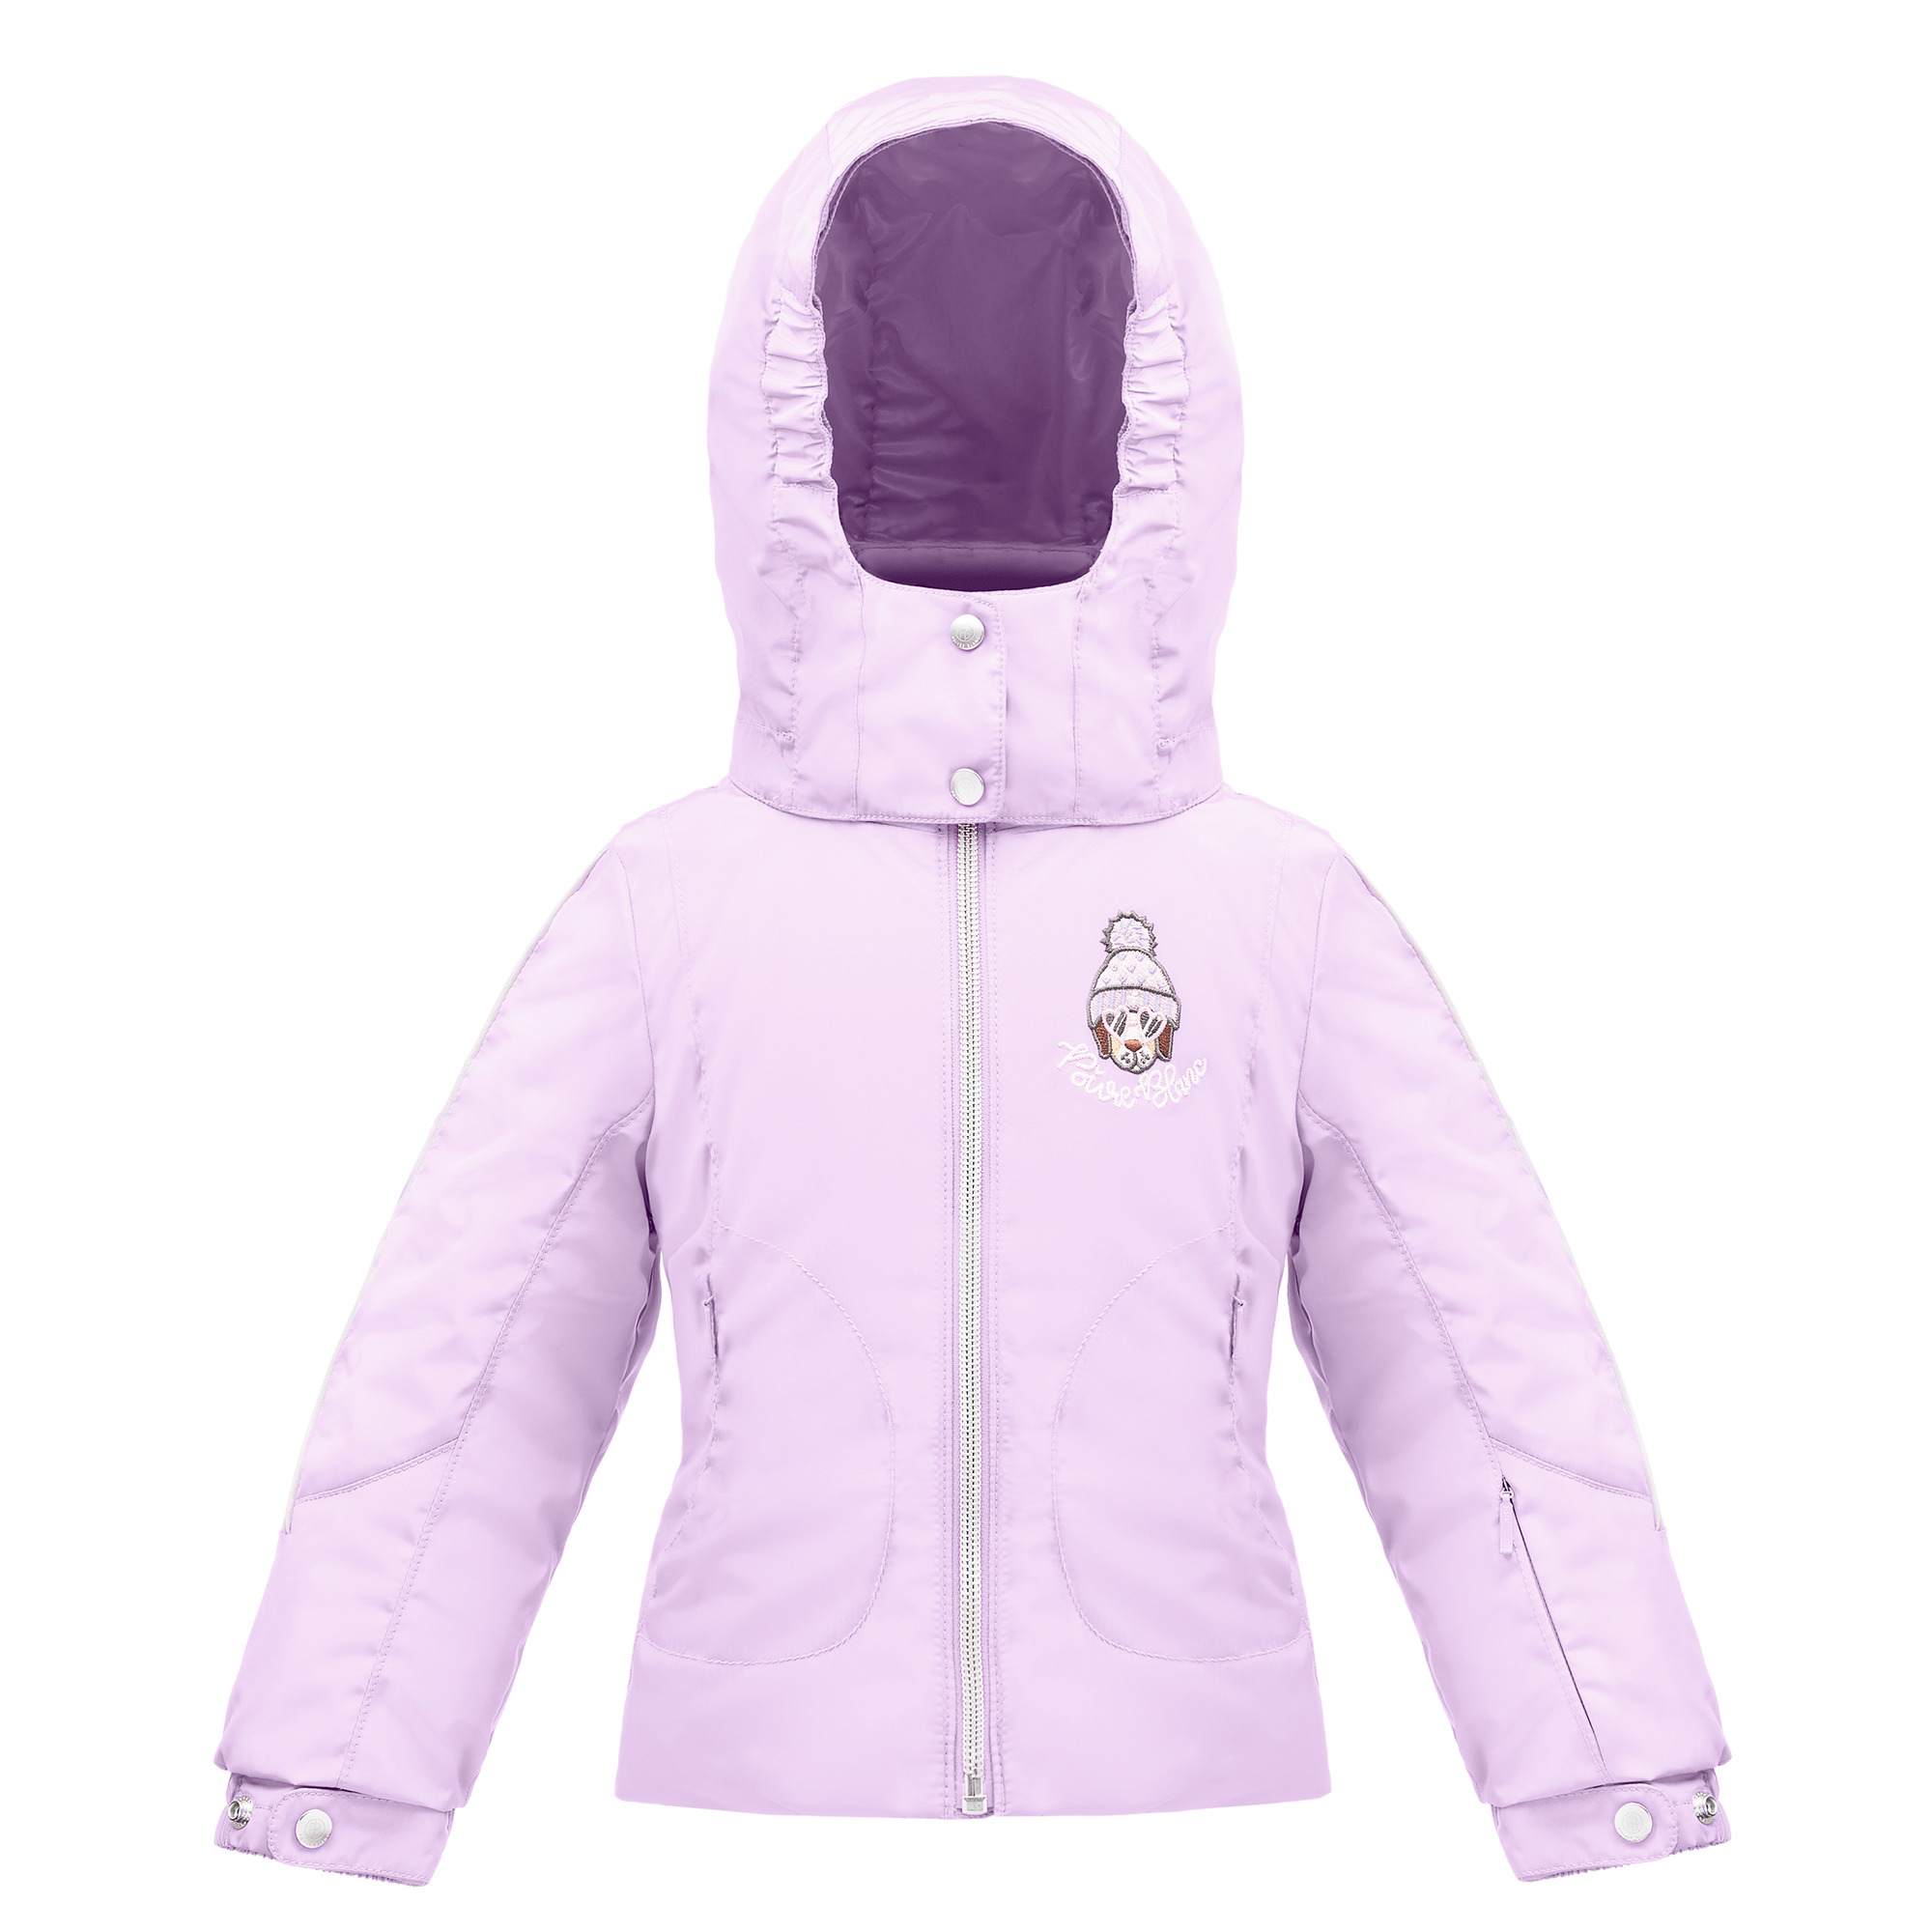 Geci Ski & Snow -  poivre blanc Baby Girl Ski Jacket